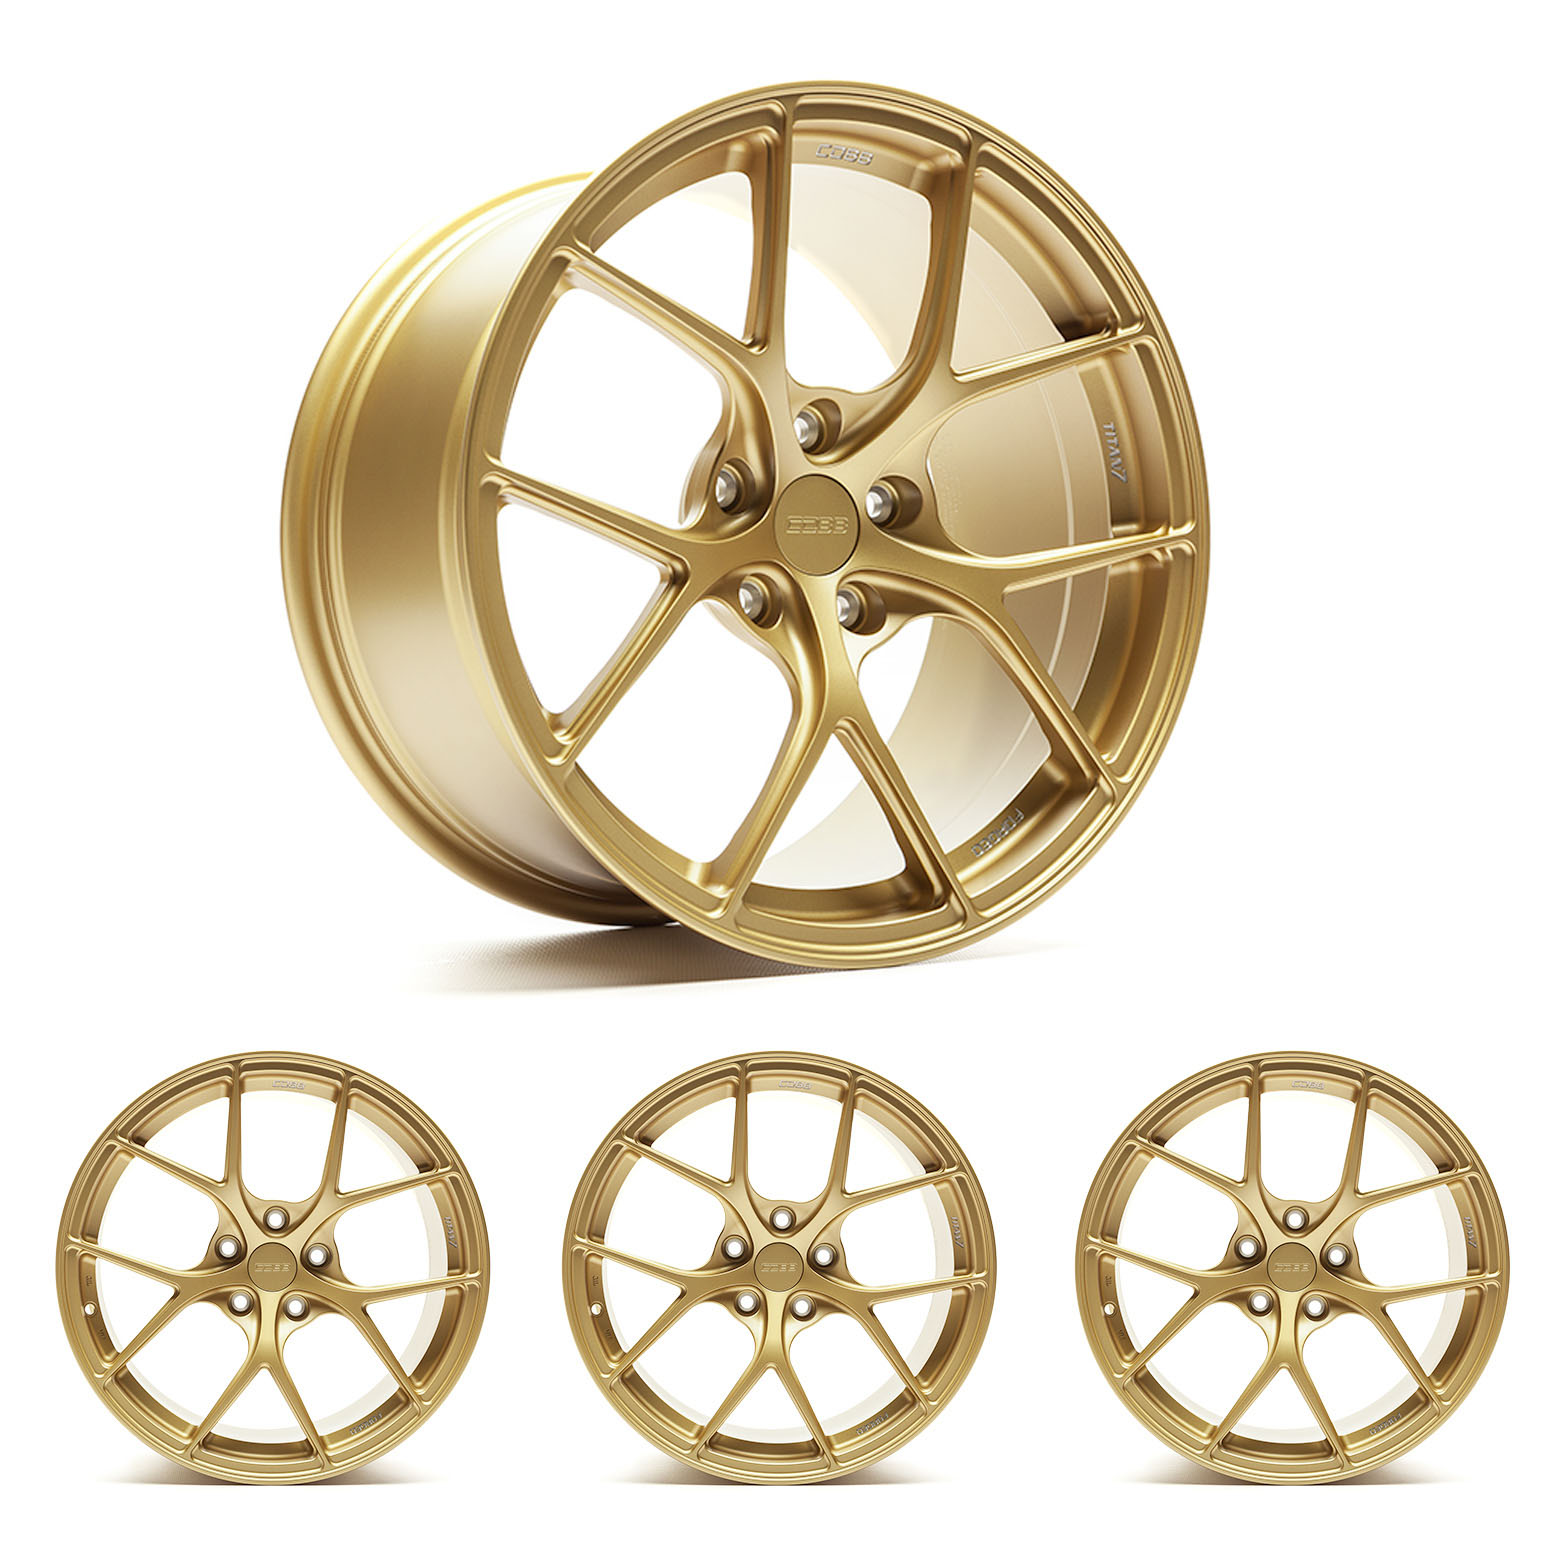 COBB Tuning - Titan7 T-S5 COBB Edition Cyber Gold Wheels